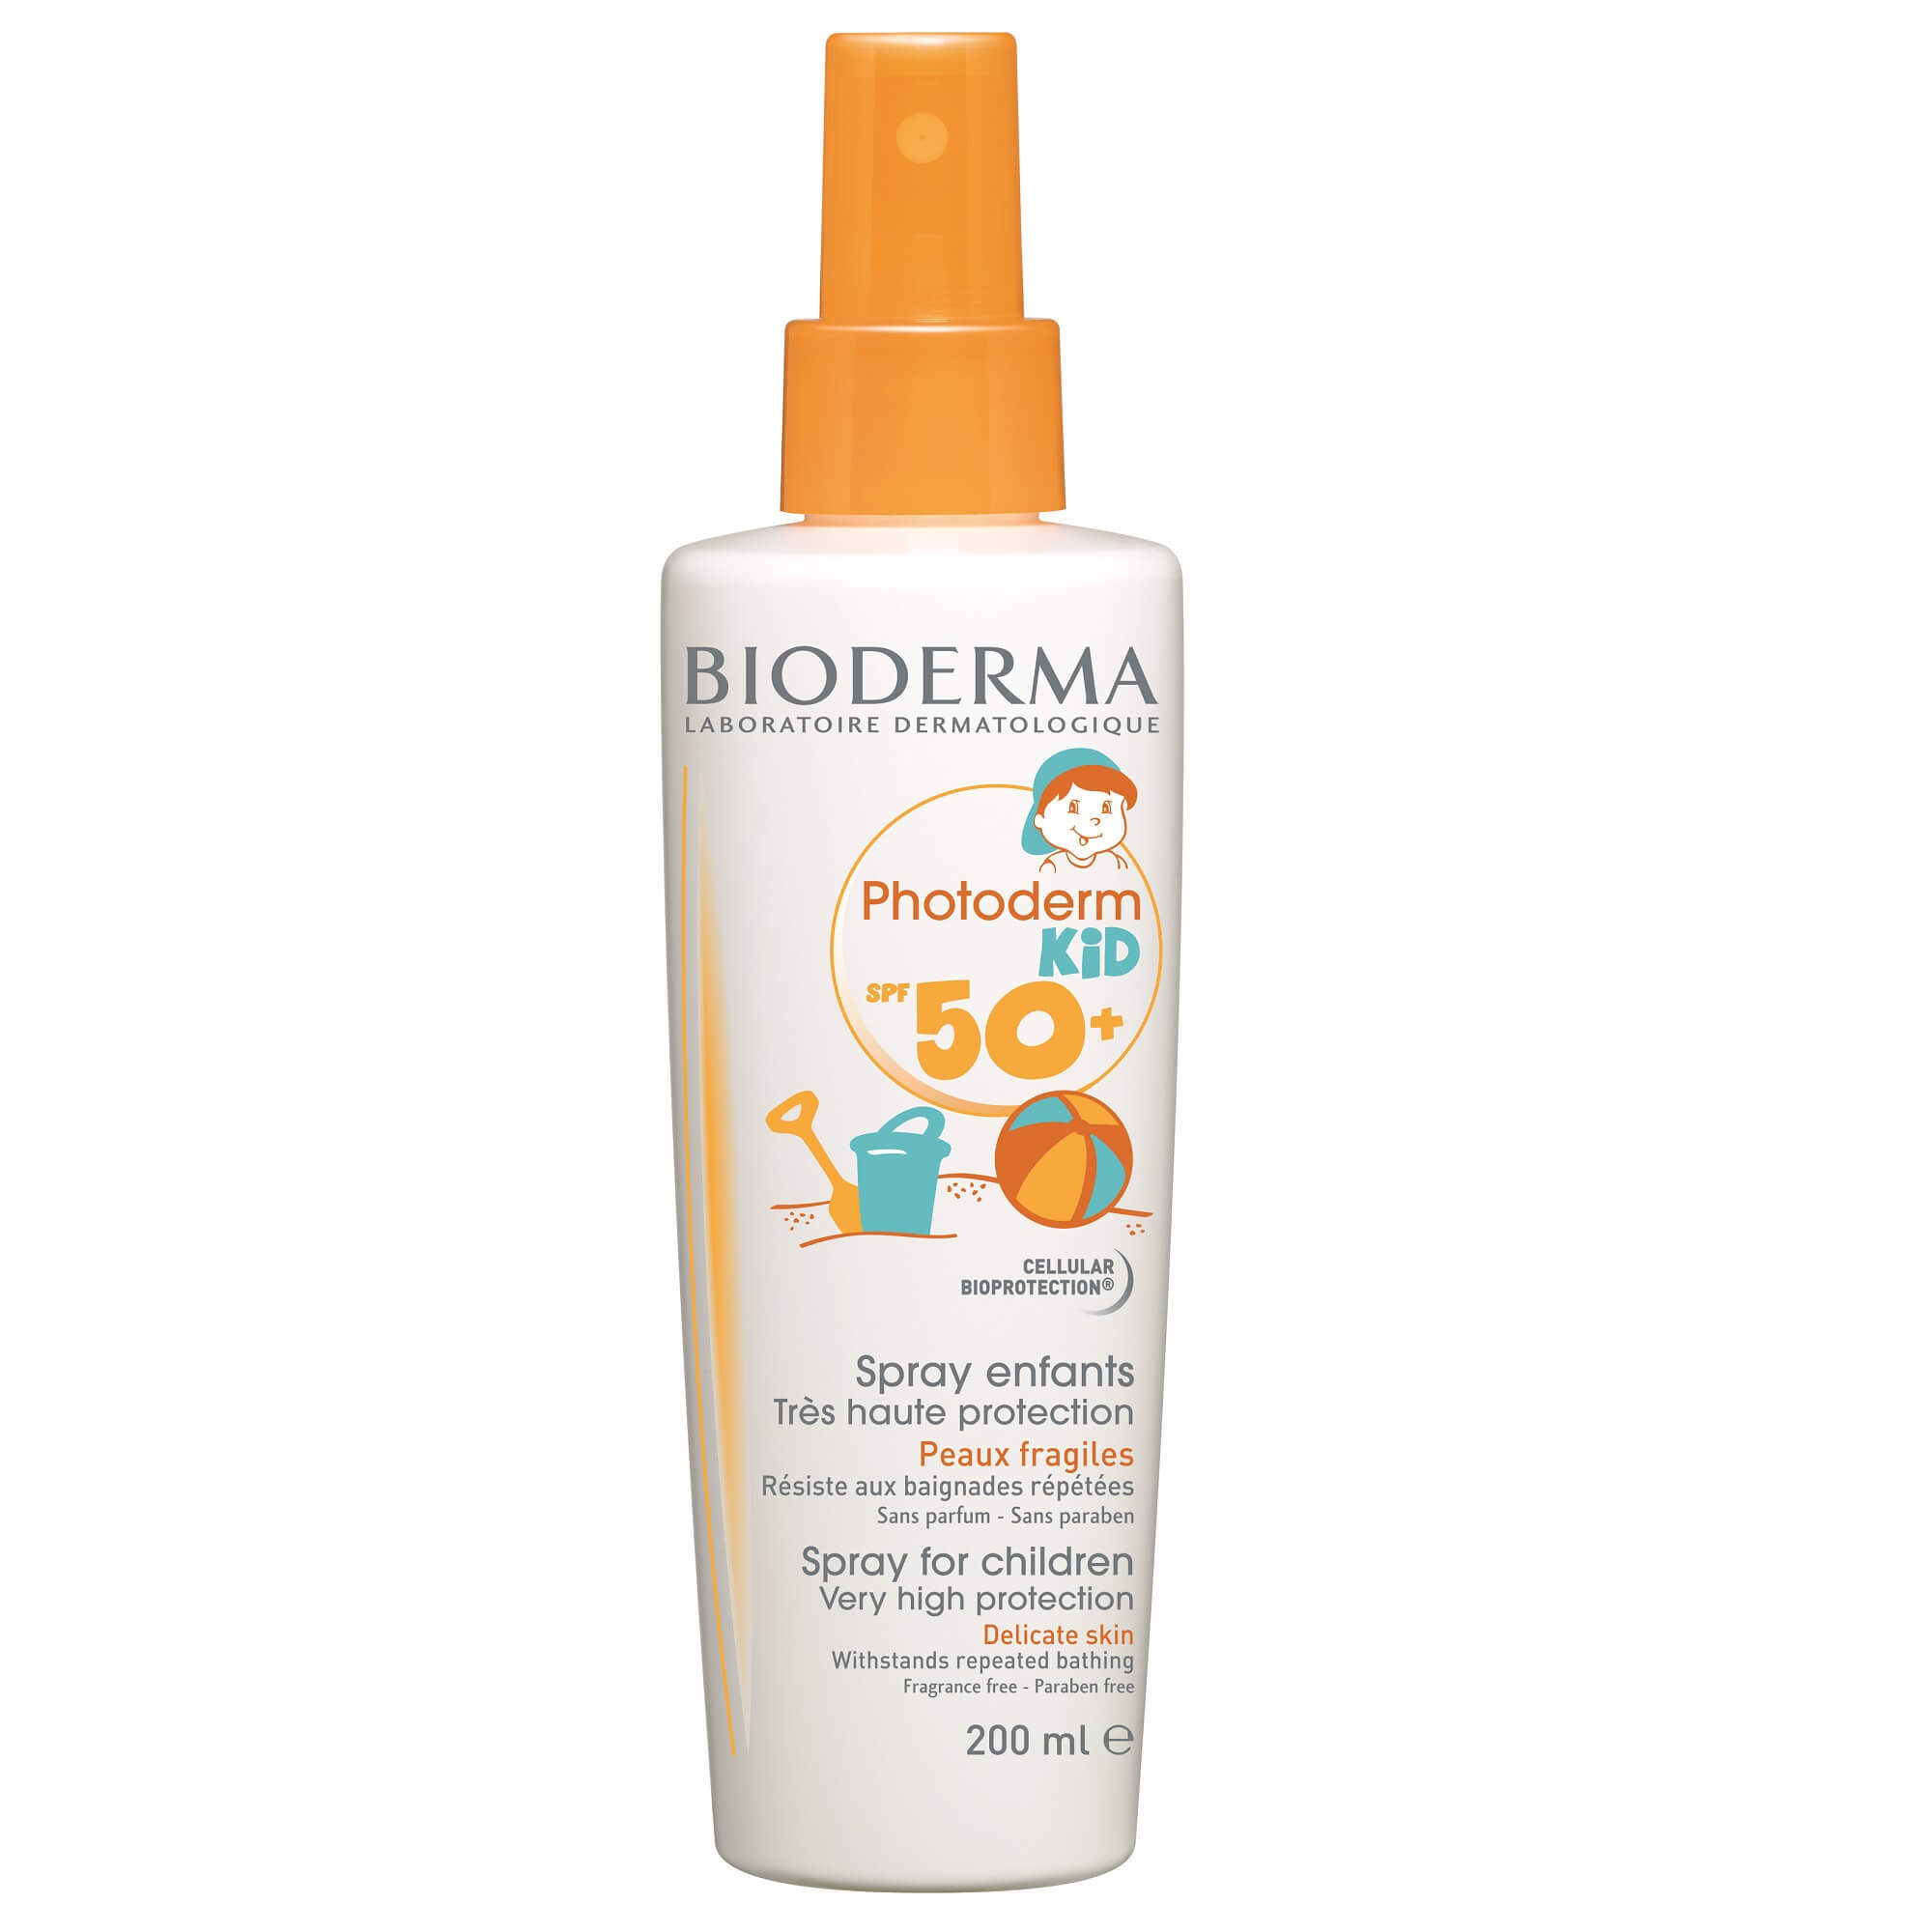 Bioderma Photoderm KID Spray protectie solara pentru copii SPF 50+, 200 ml